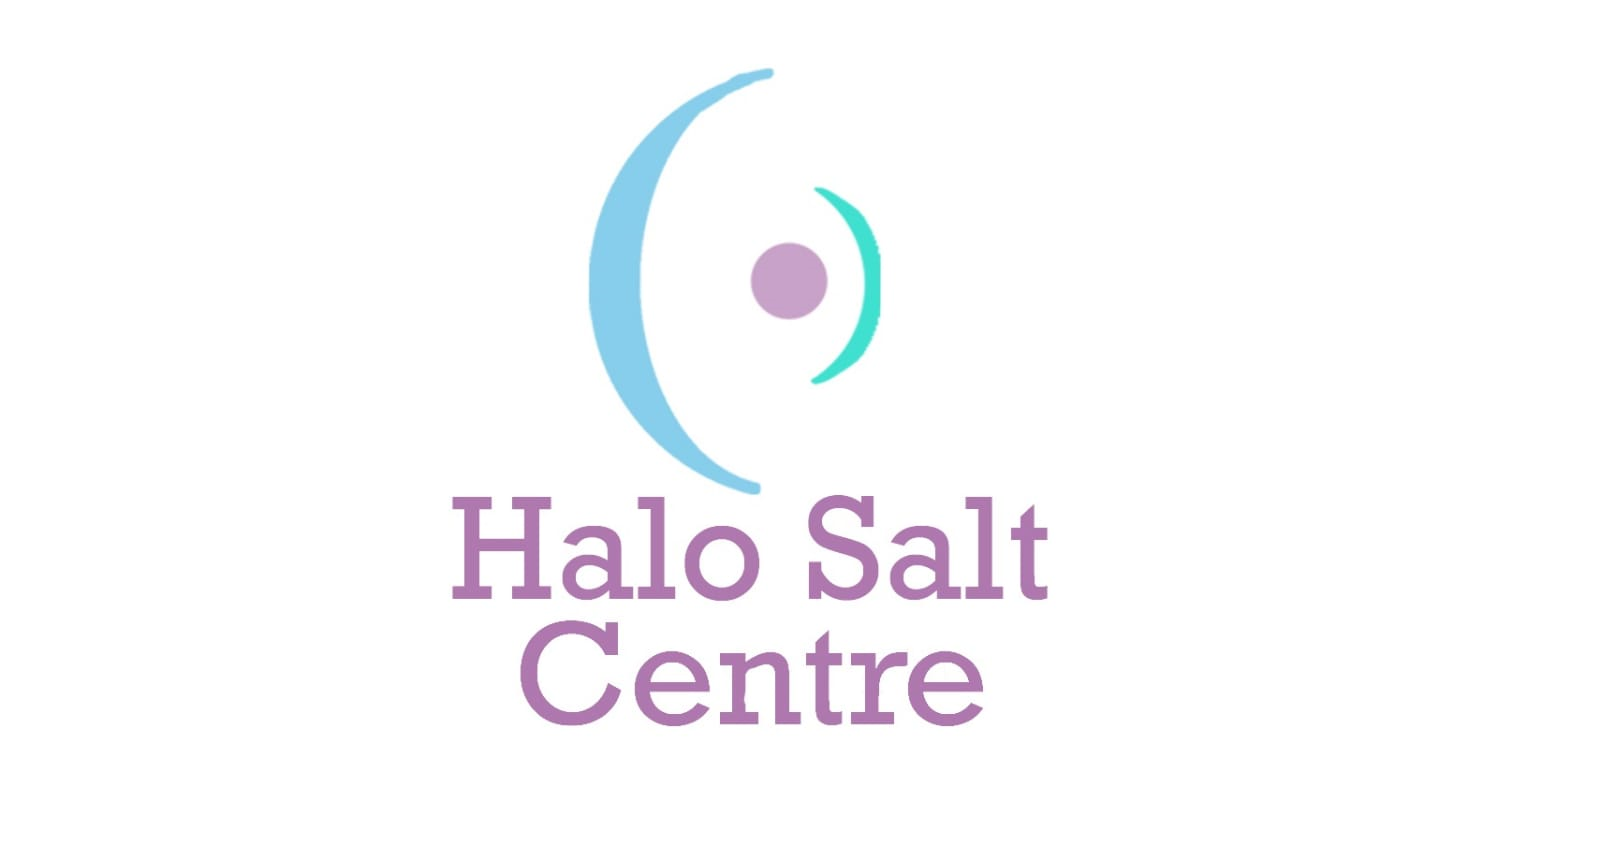 Halo Salt Centre